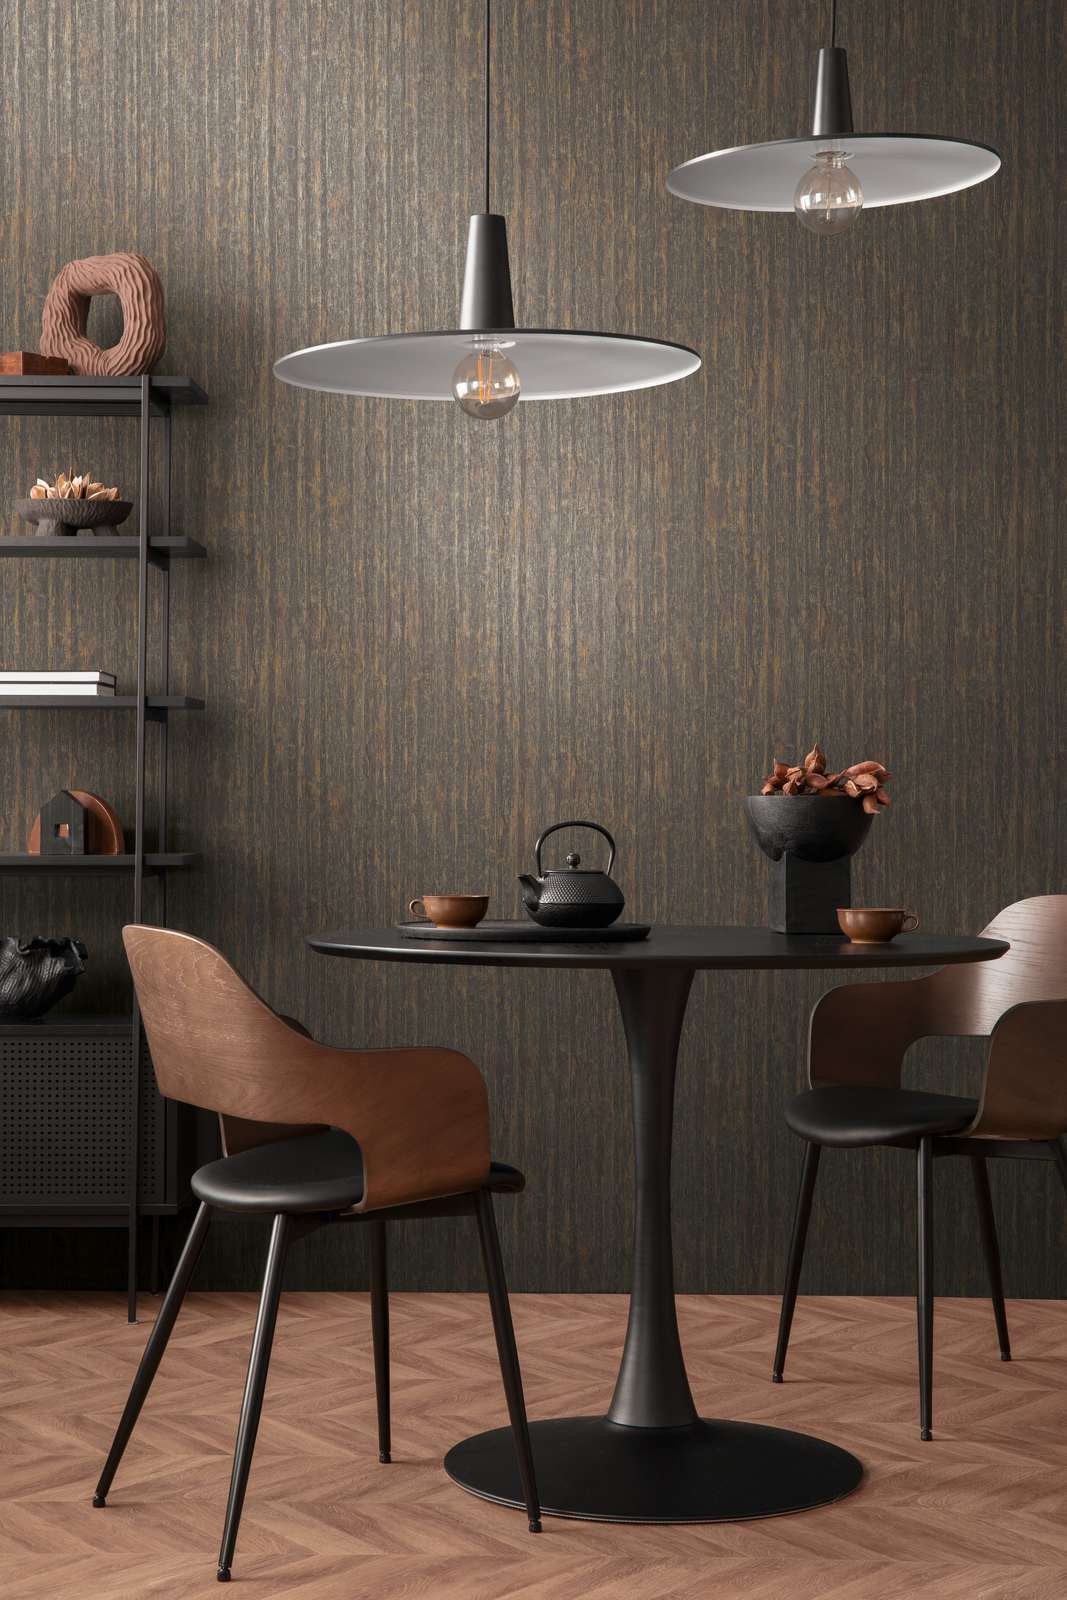             Non-woven wallpaper with wavy line pattern - black, orange, bronze
        